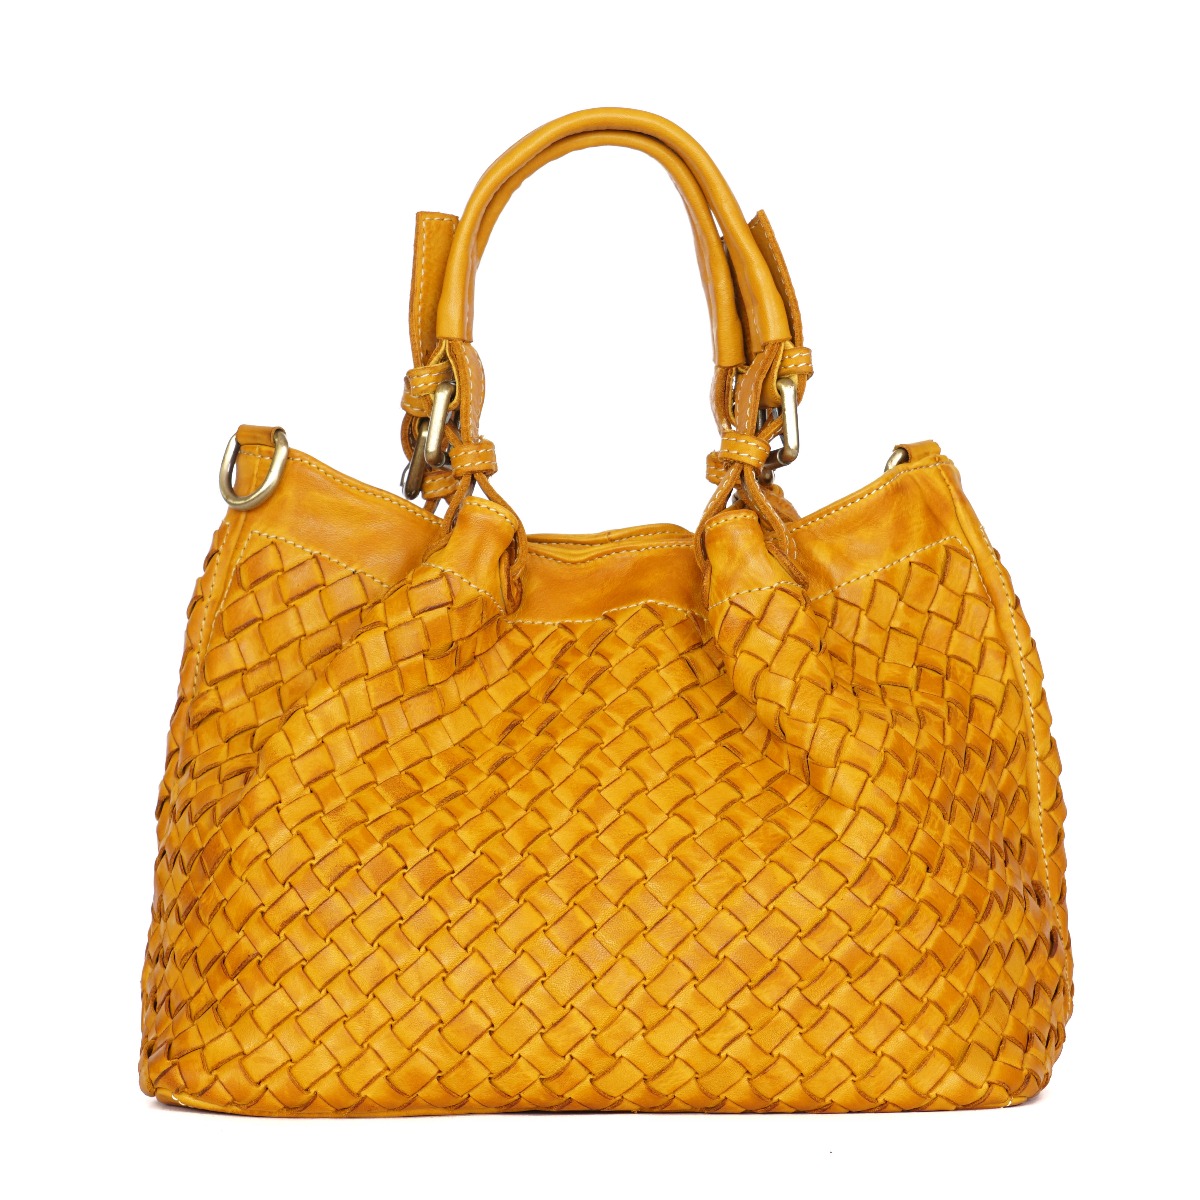 Woven leather hobo bag - yellow color